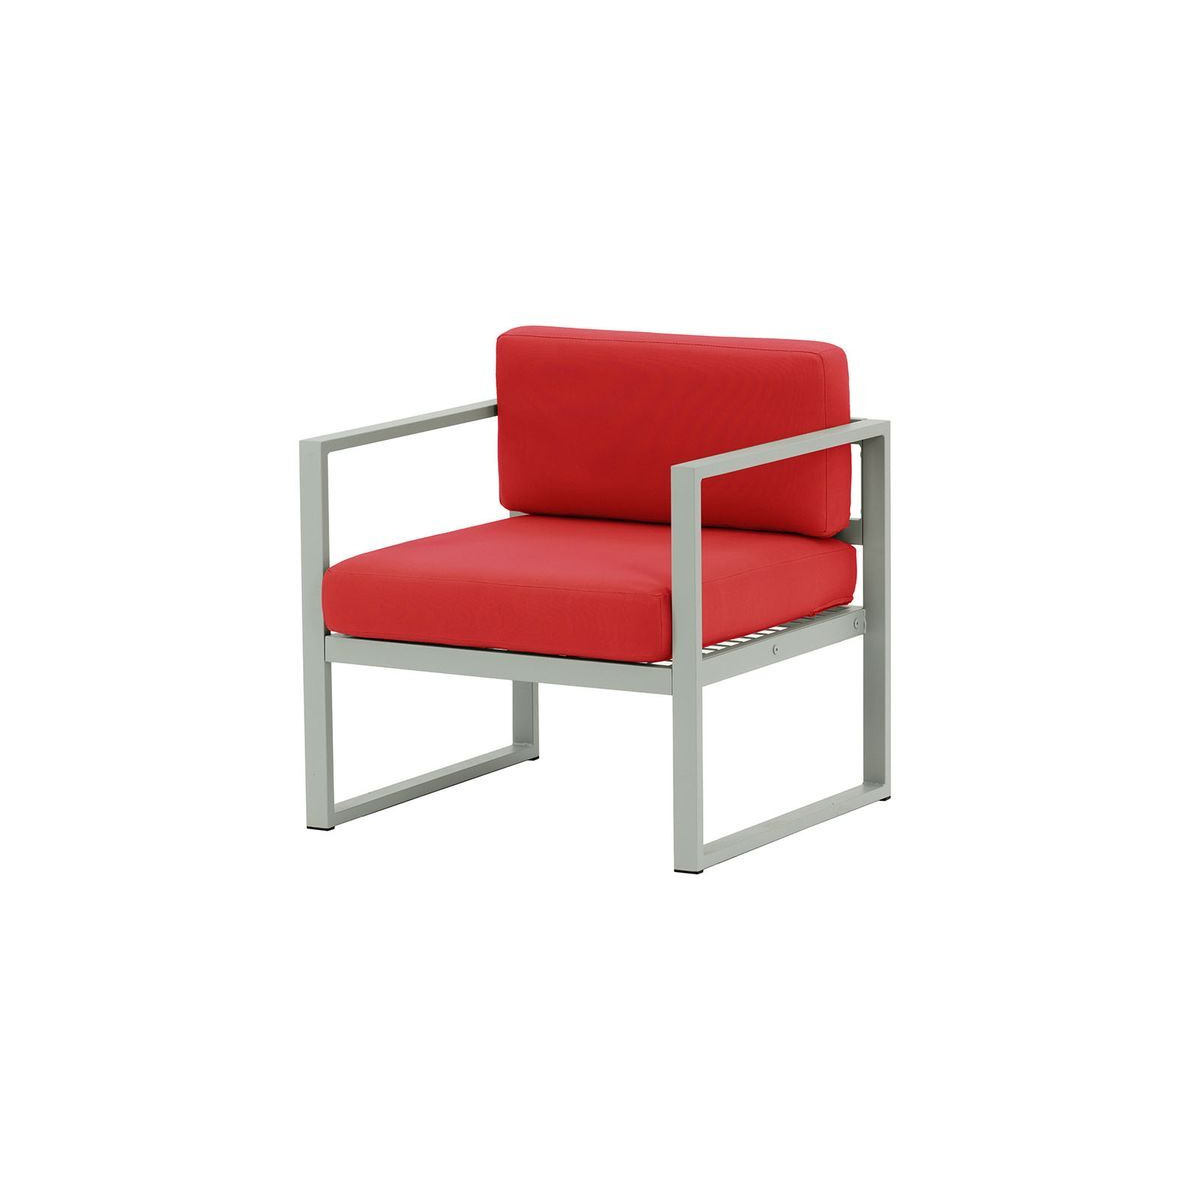 Sunset Garden Armchair, red, Leg colour: grey steel - image 1